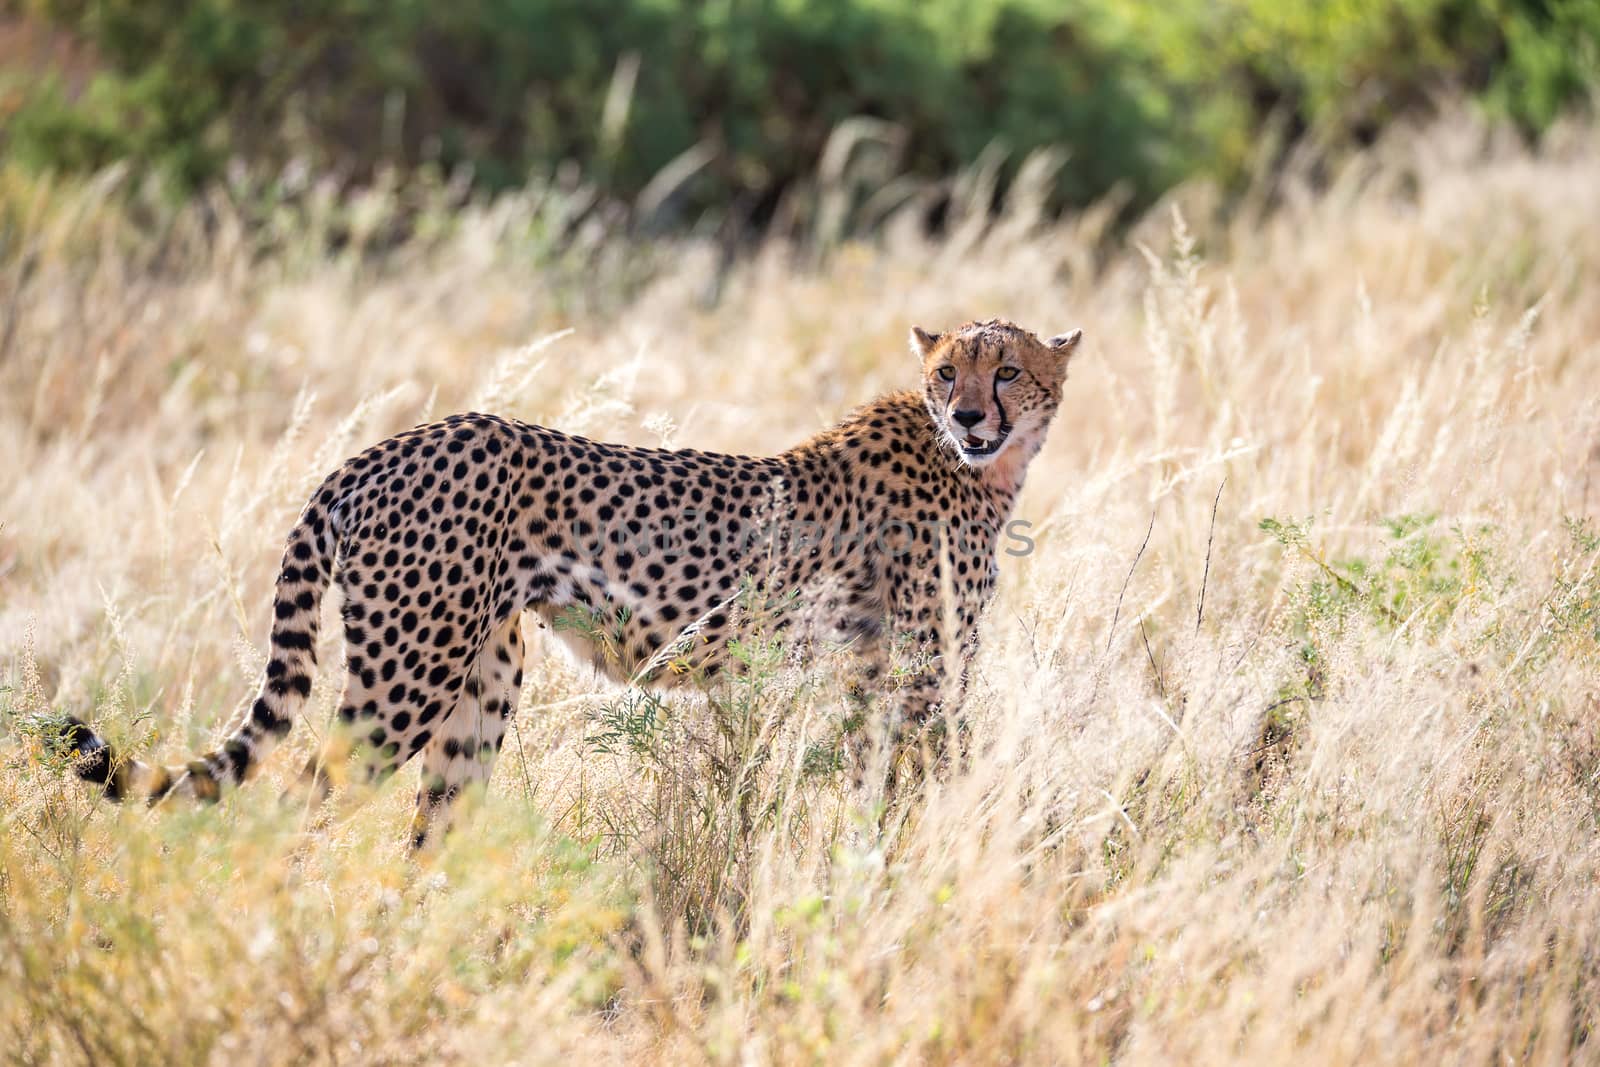 One cheetah in the grass in the savannah